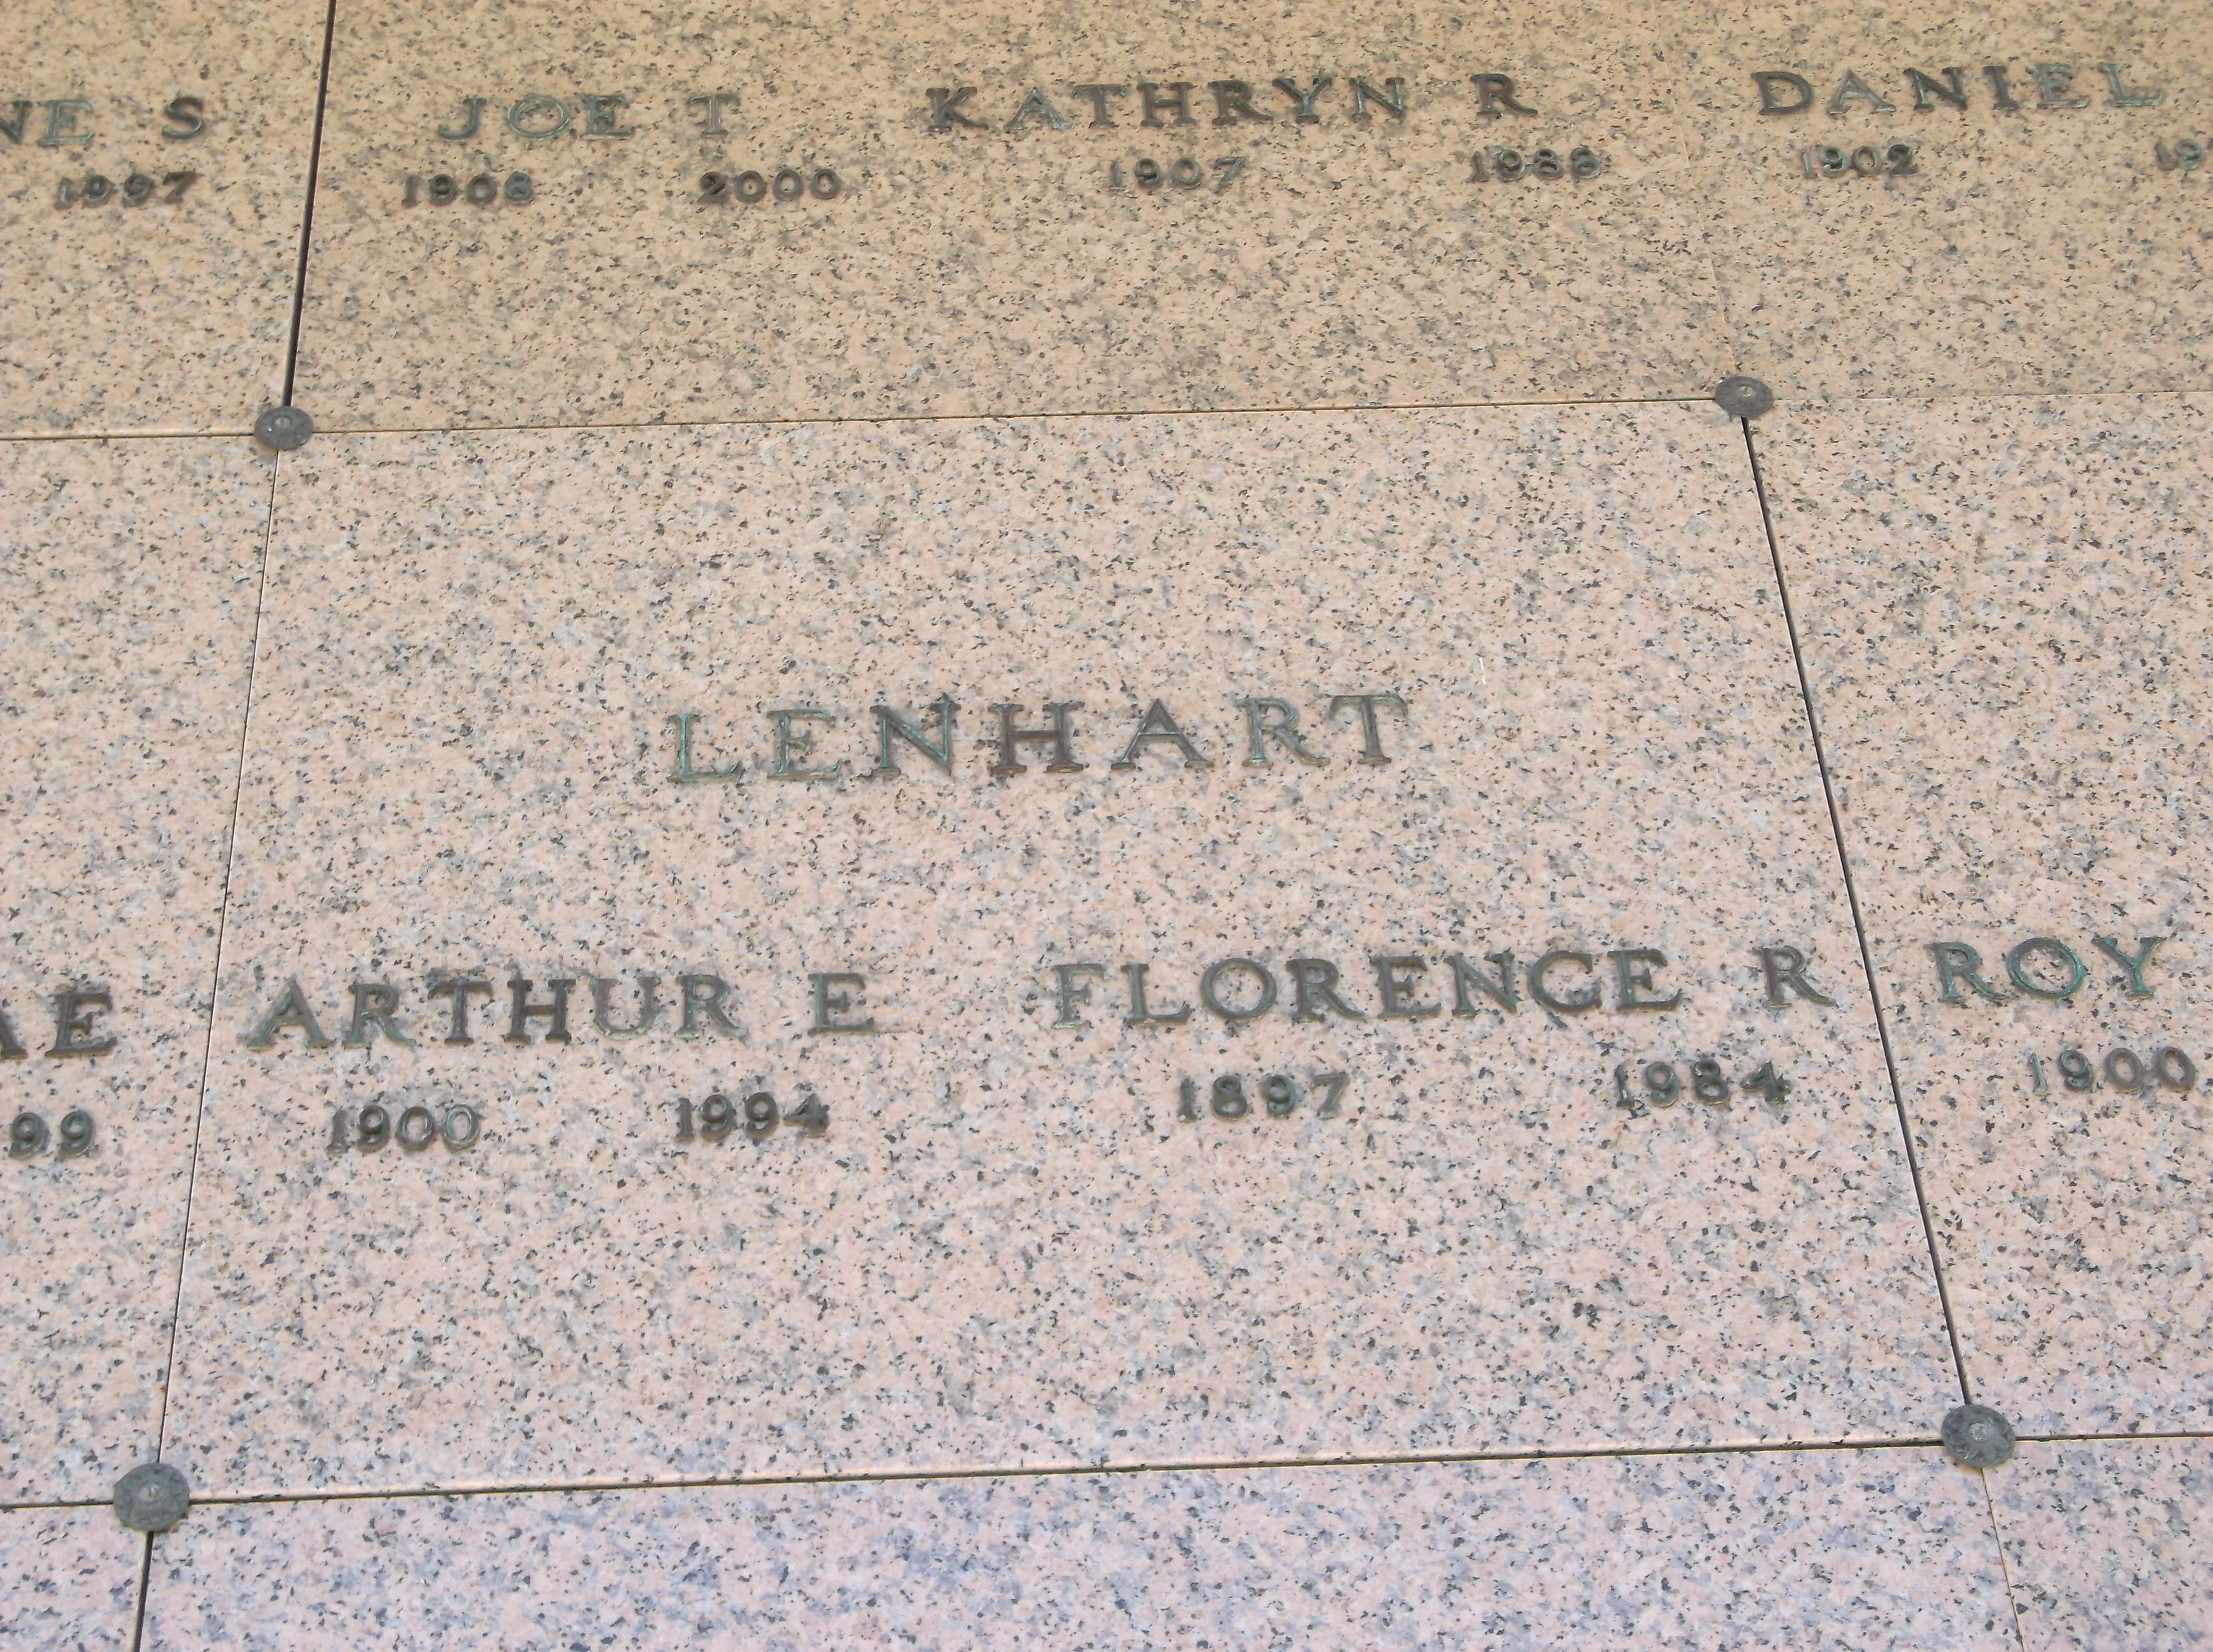 Florence R Lenhart